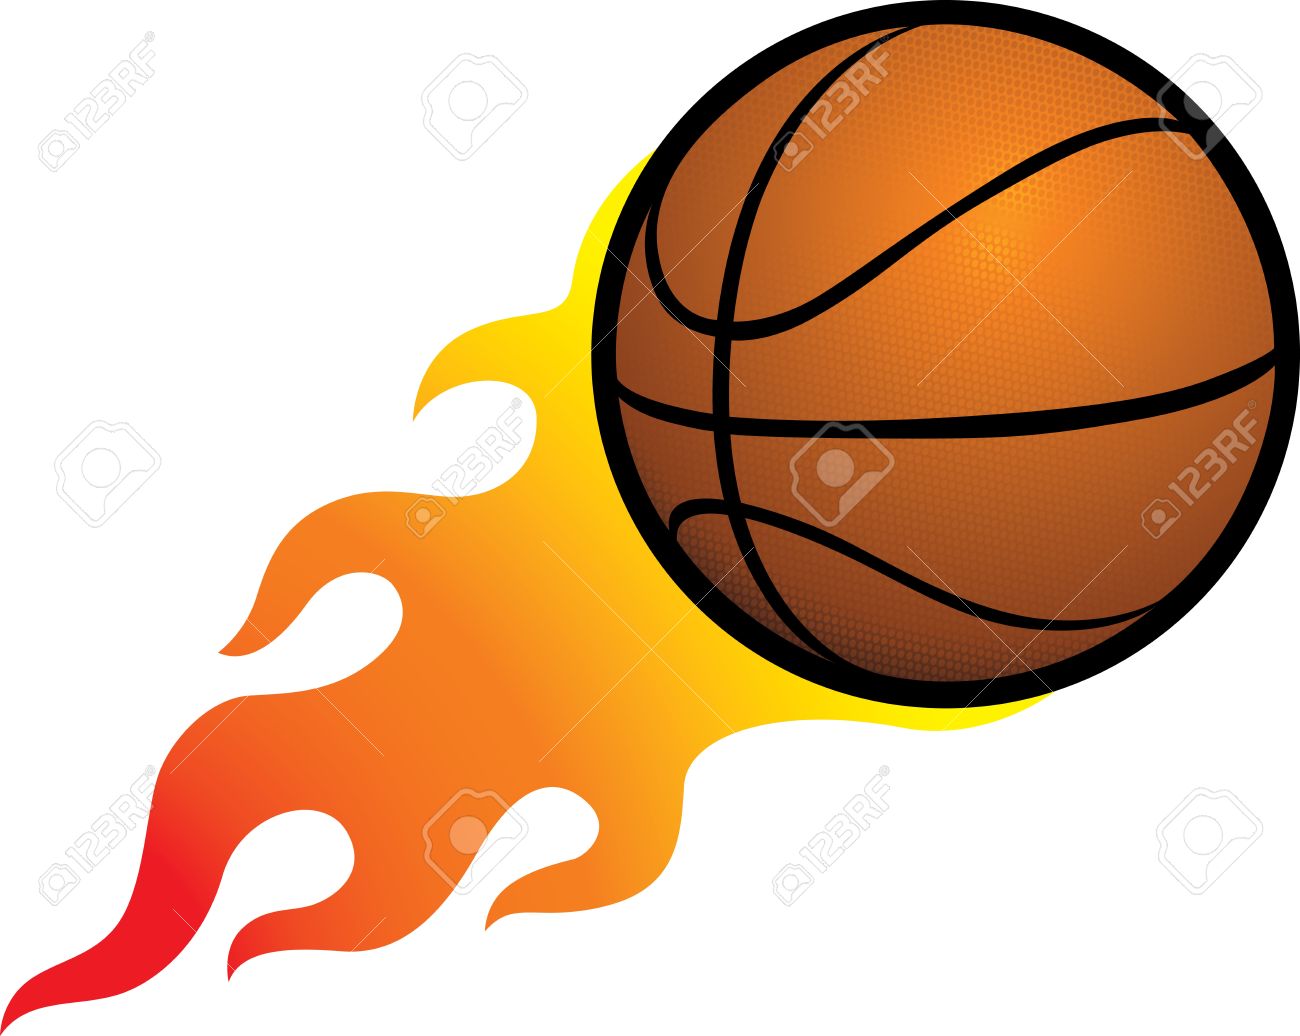 Flaming basketball clipart